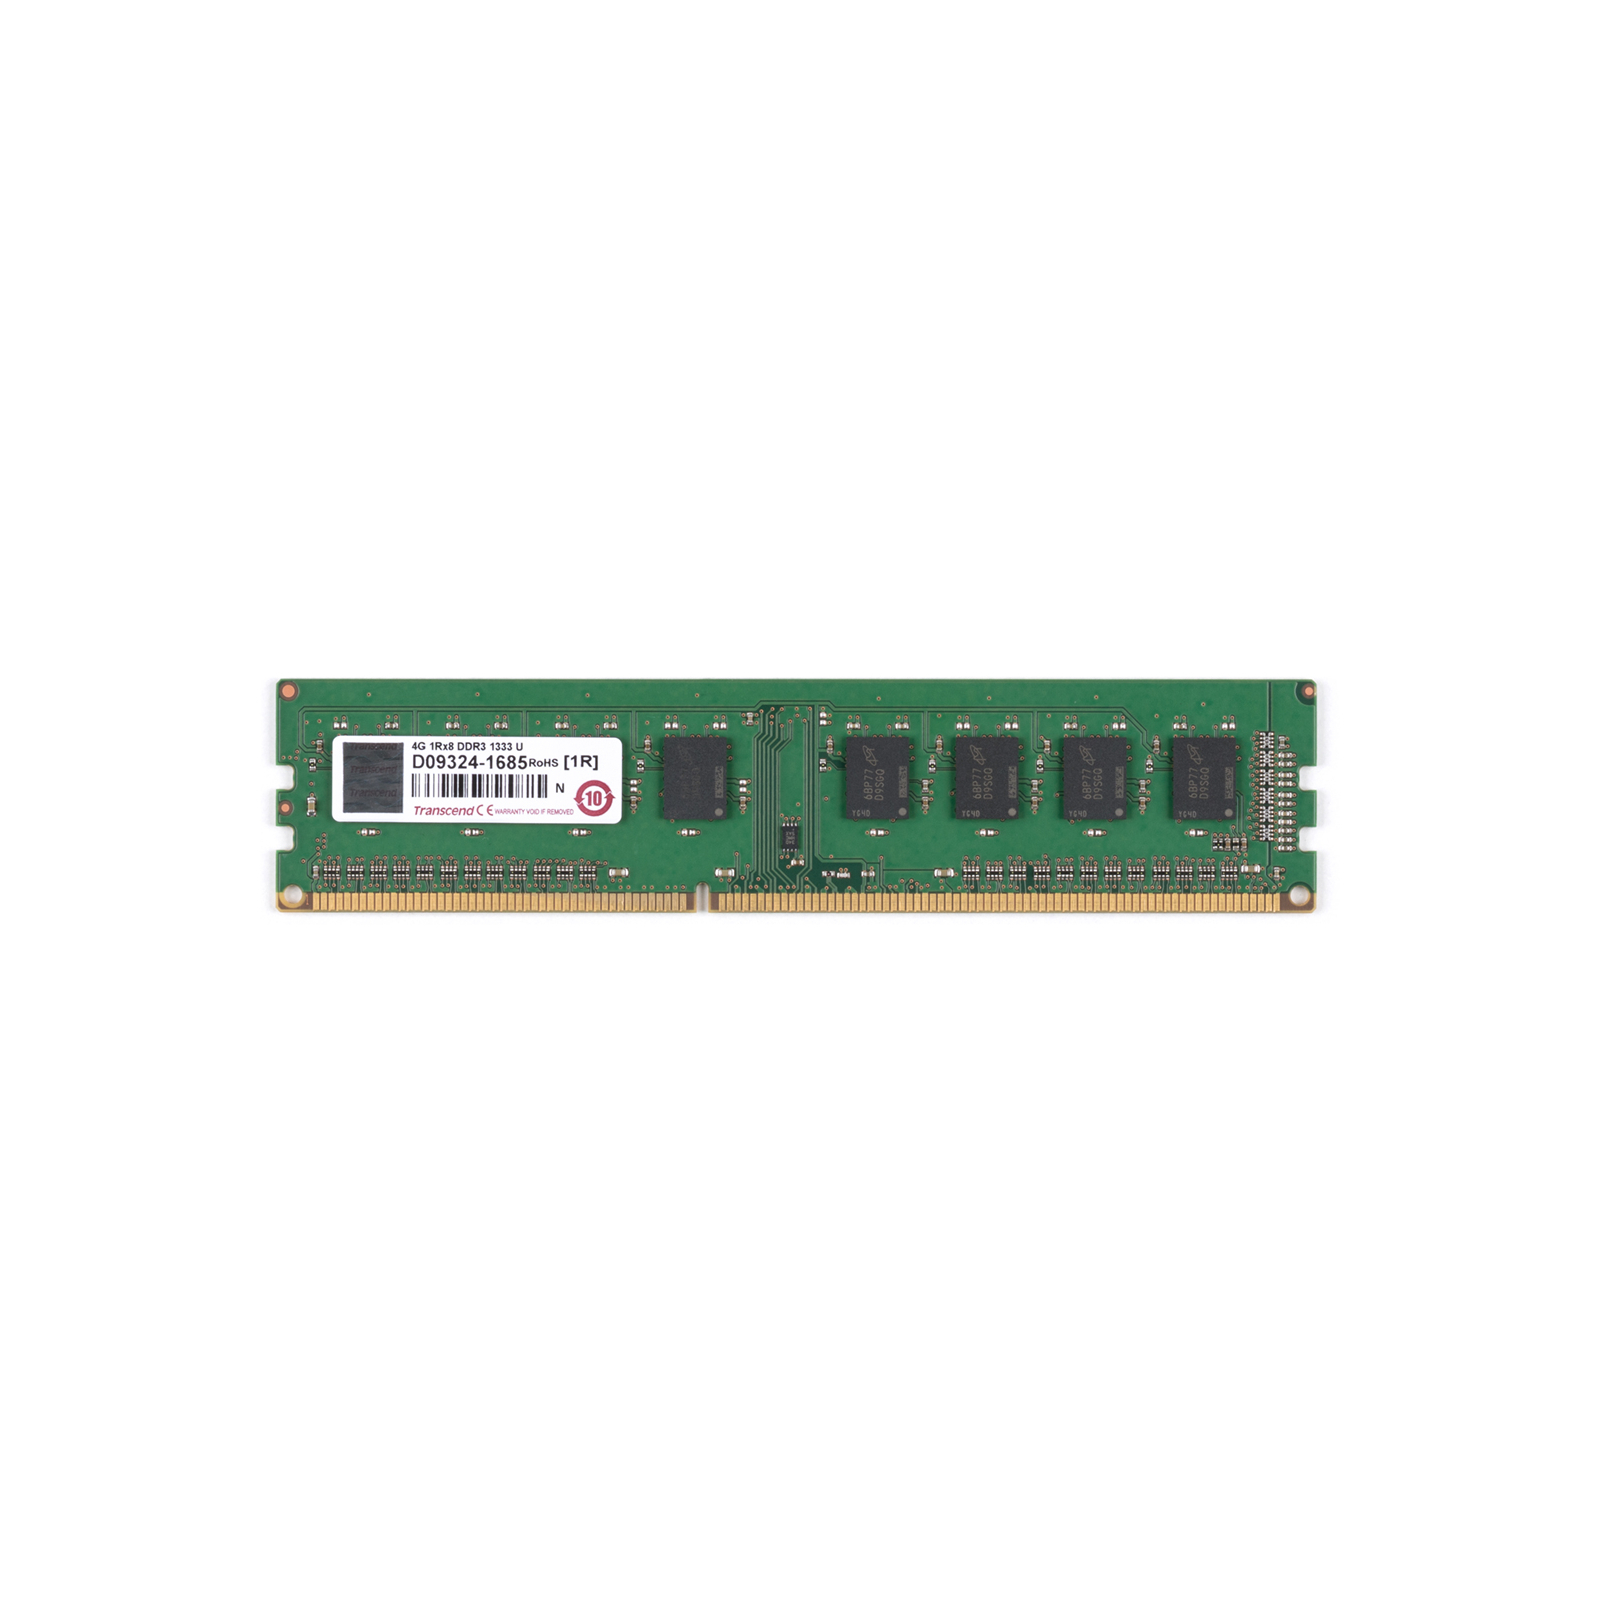 Модуль памяти для компьютера DDR3 4GB 1333 MHz Transcend (JM1333KLH-4G / JM1333KLN-4G)